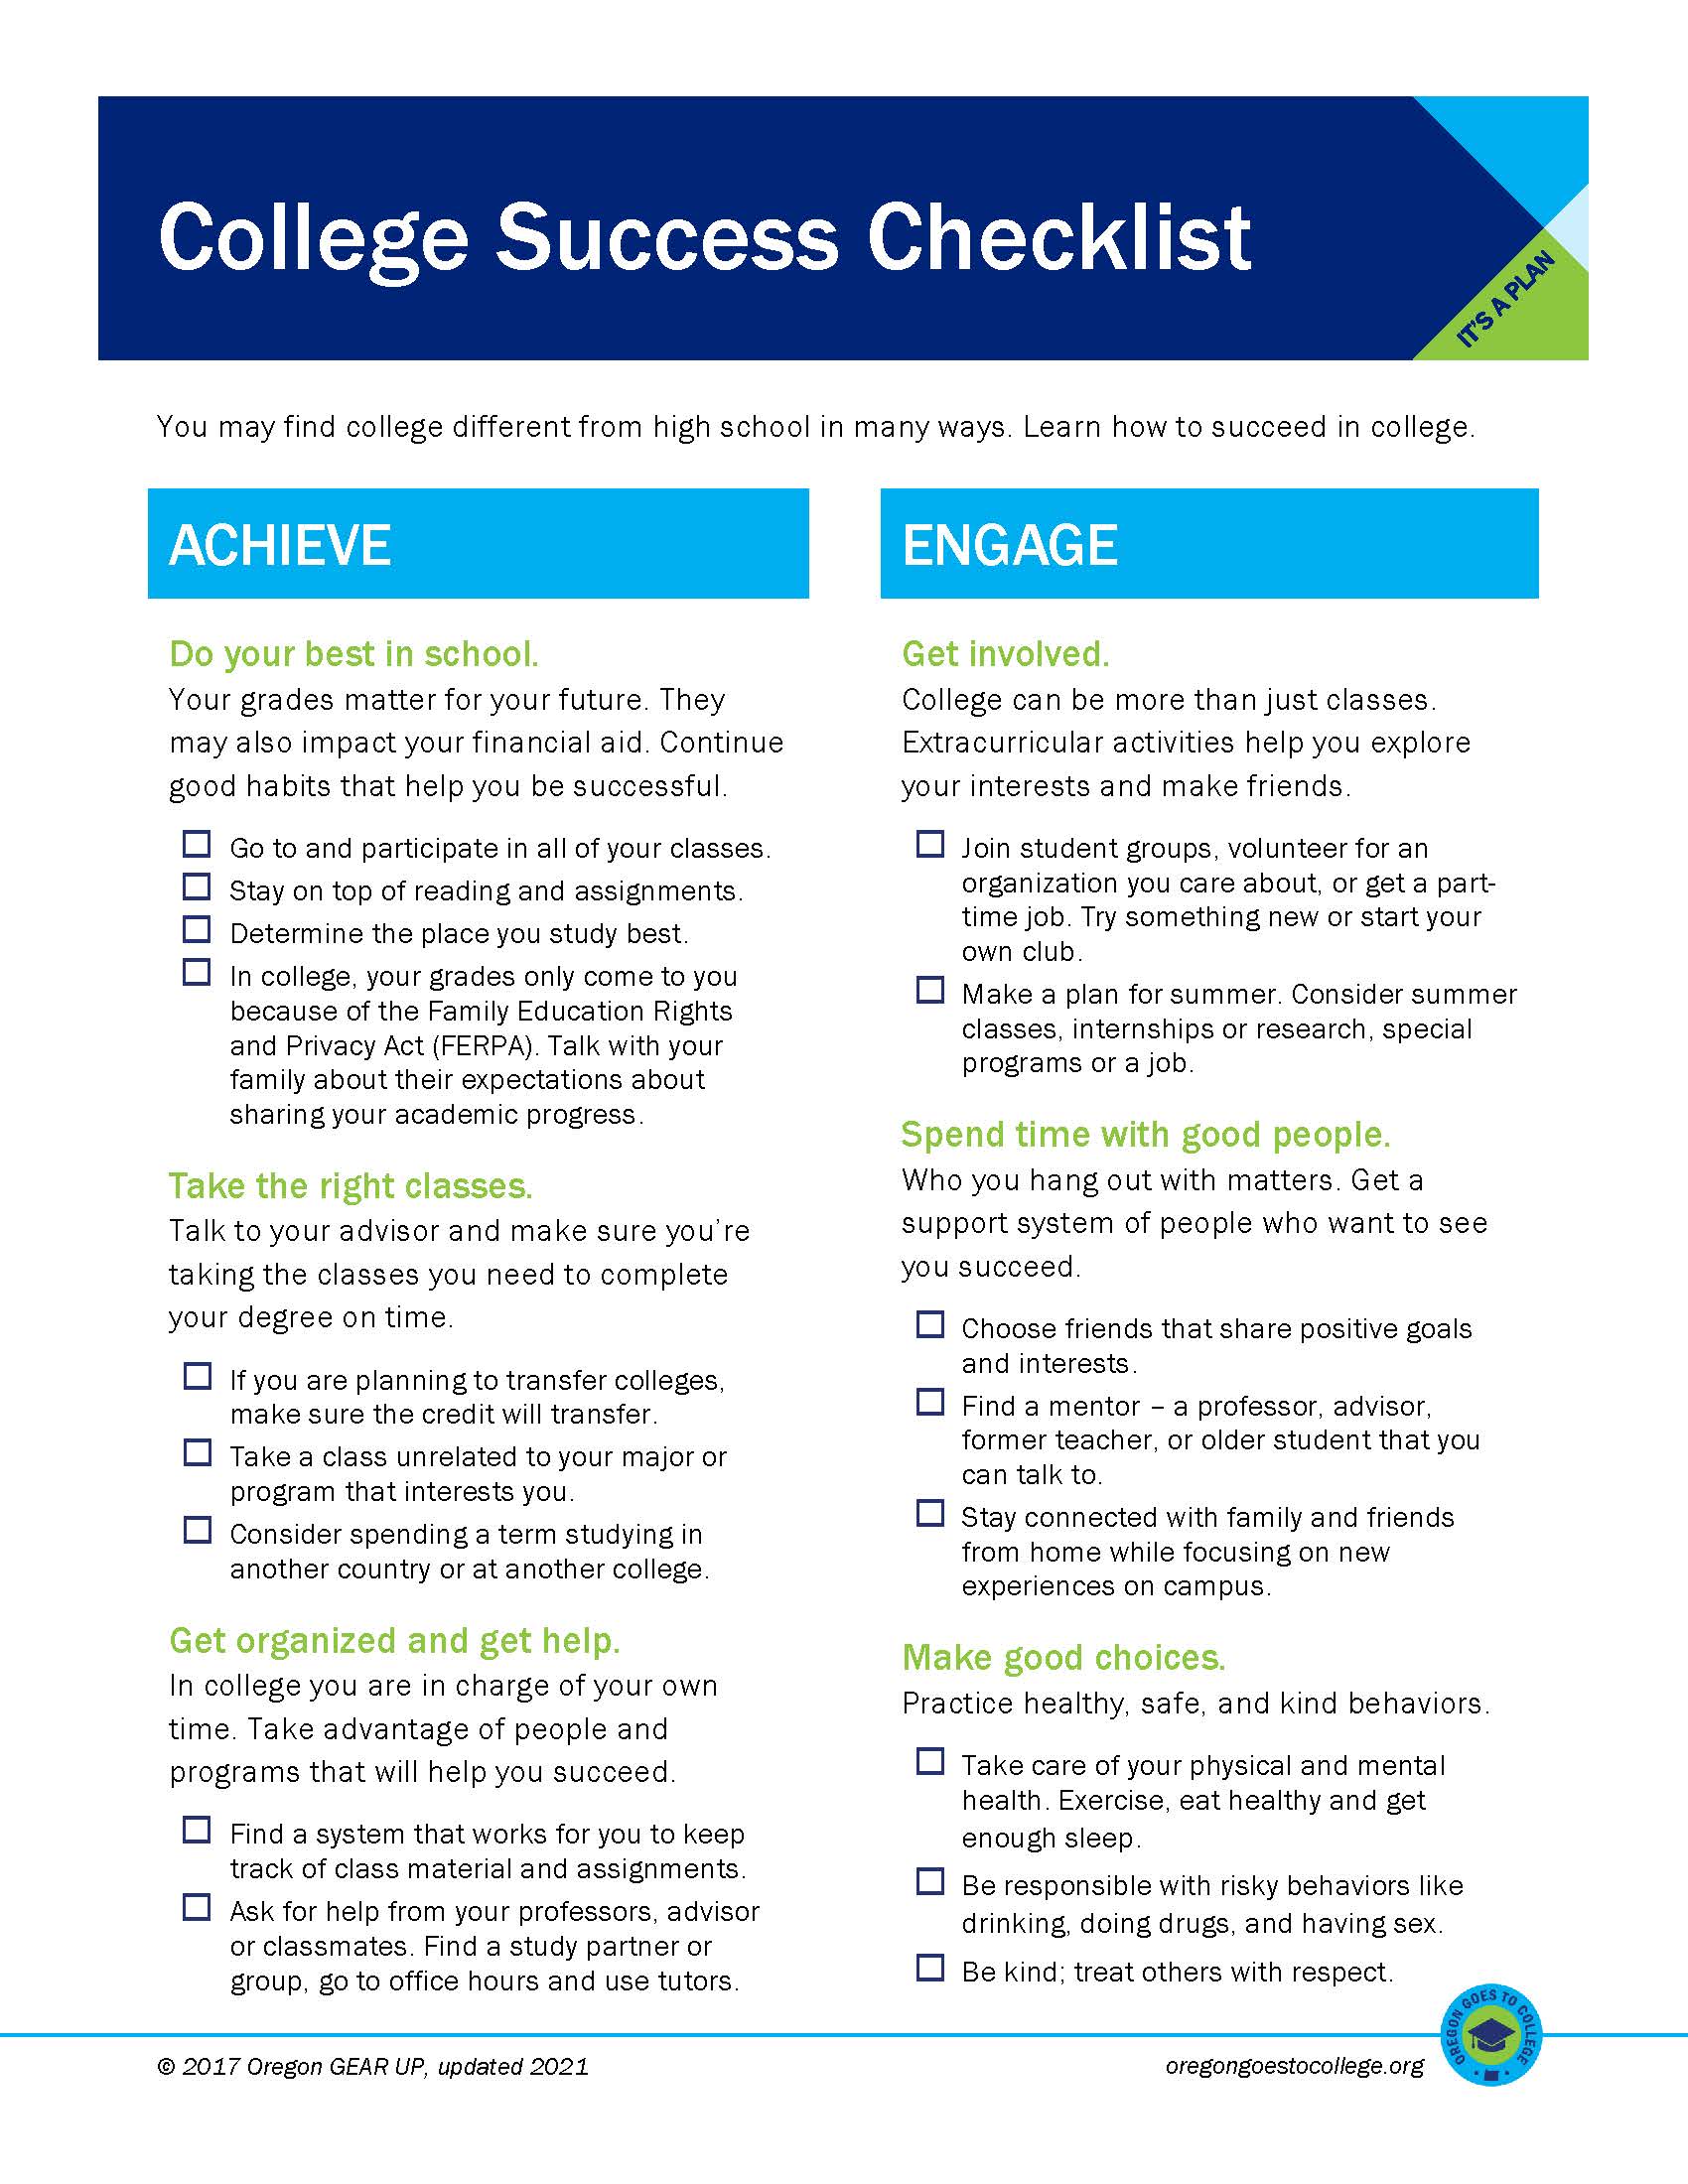 Screenshot of College Success Checklist